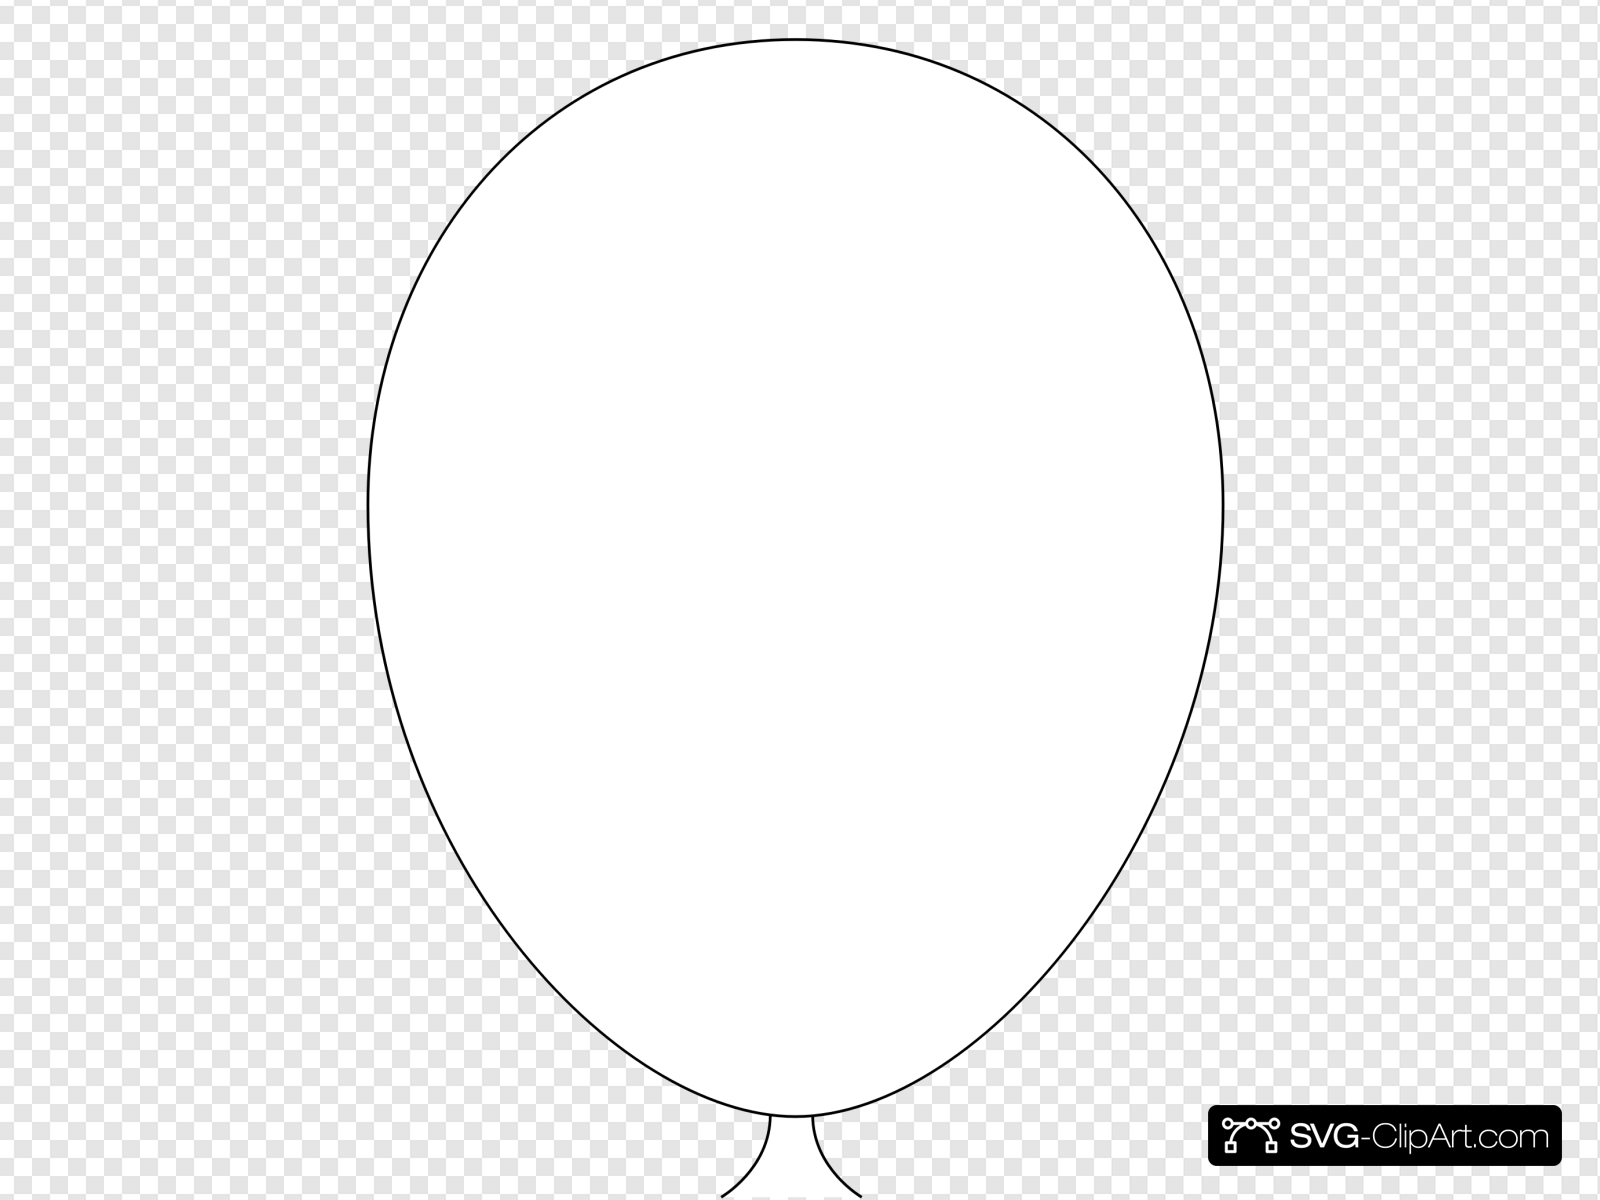 Balloon Clip art, Icon and SVG